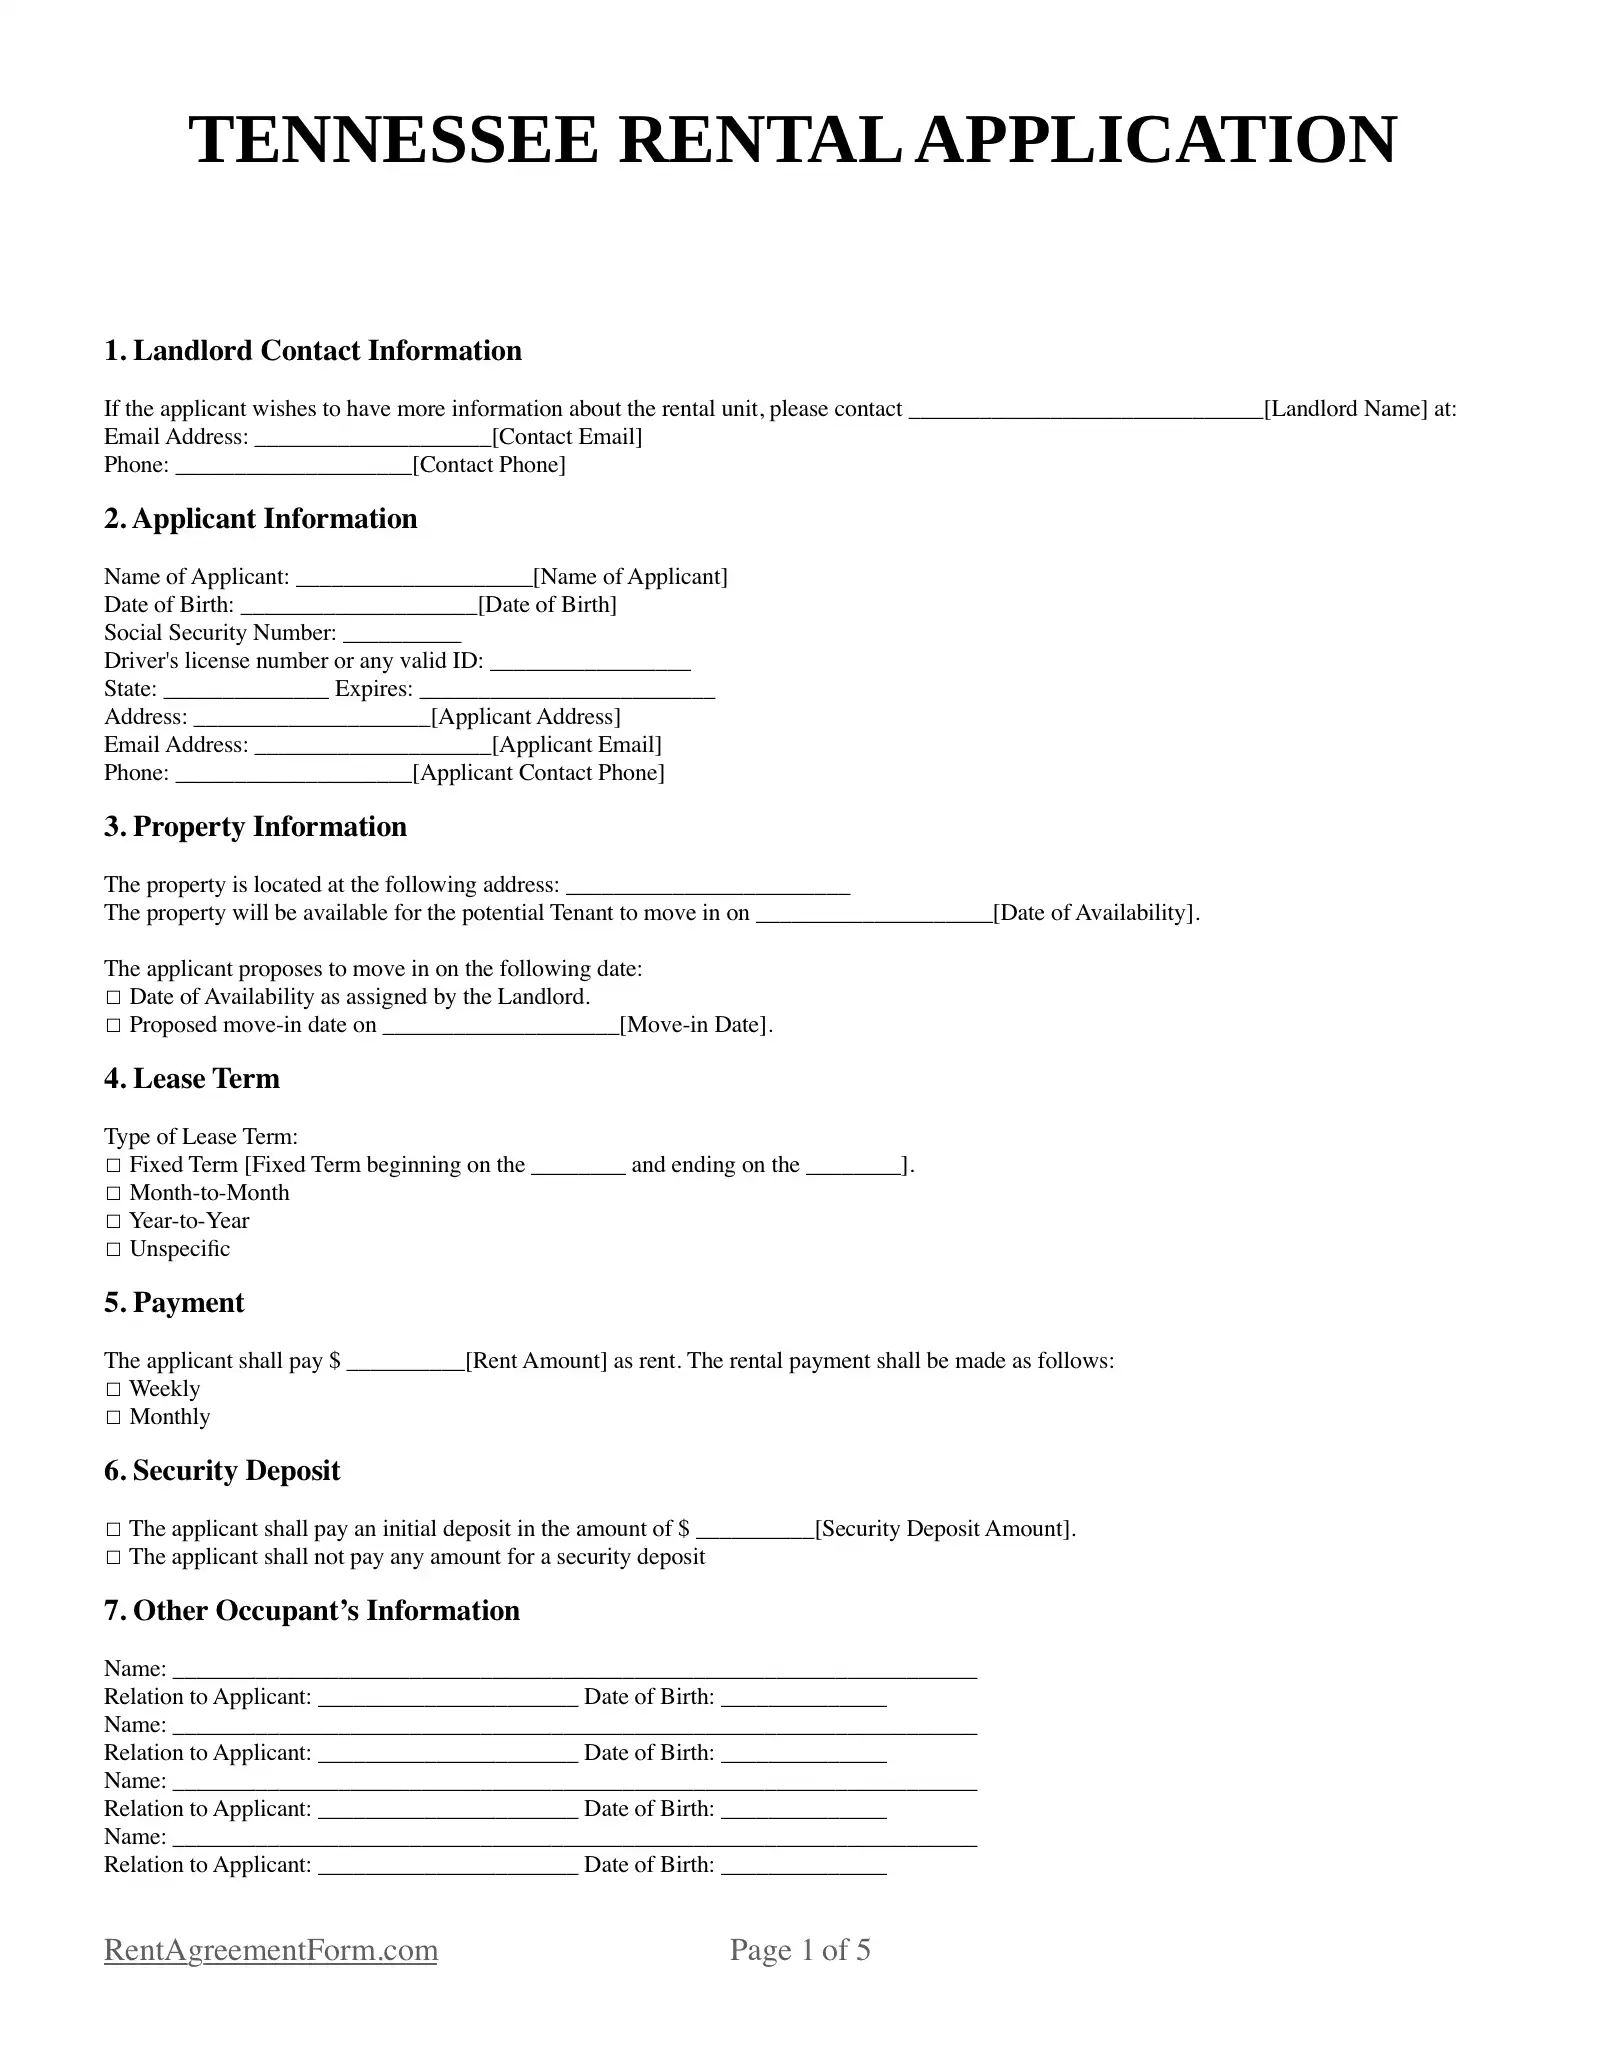 Tennessee Rental Application Sample